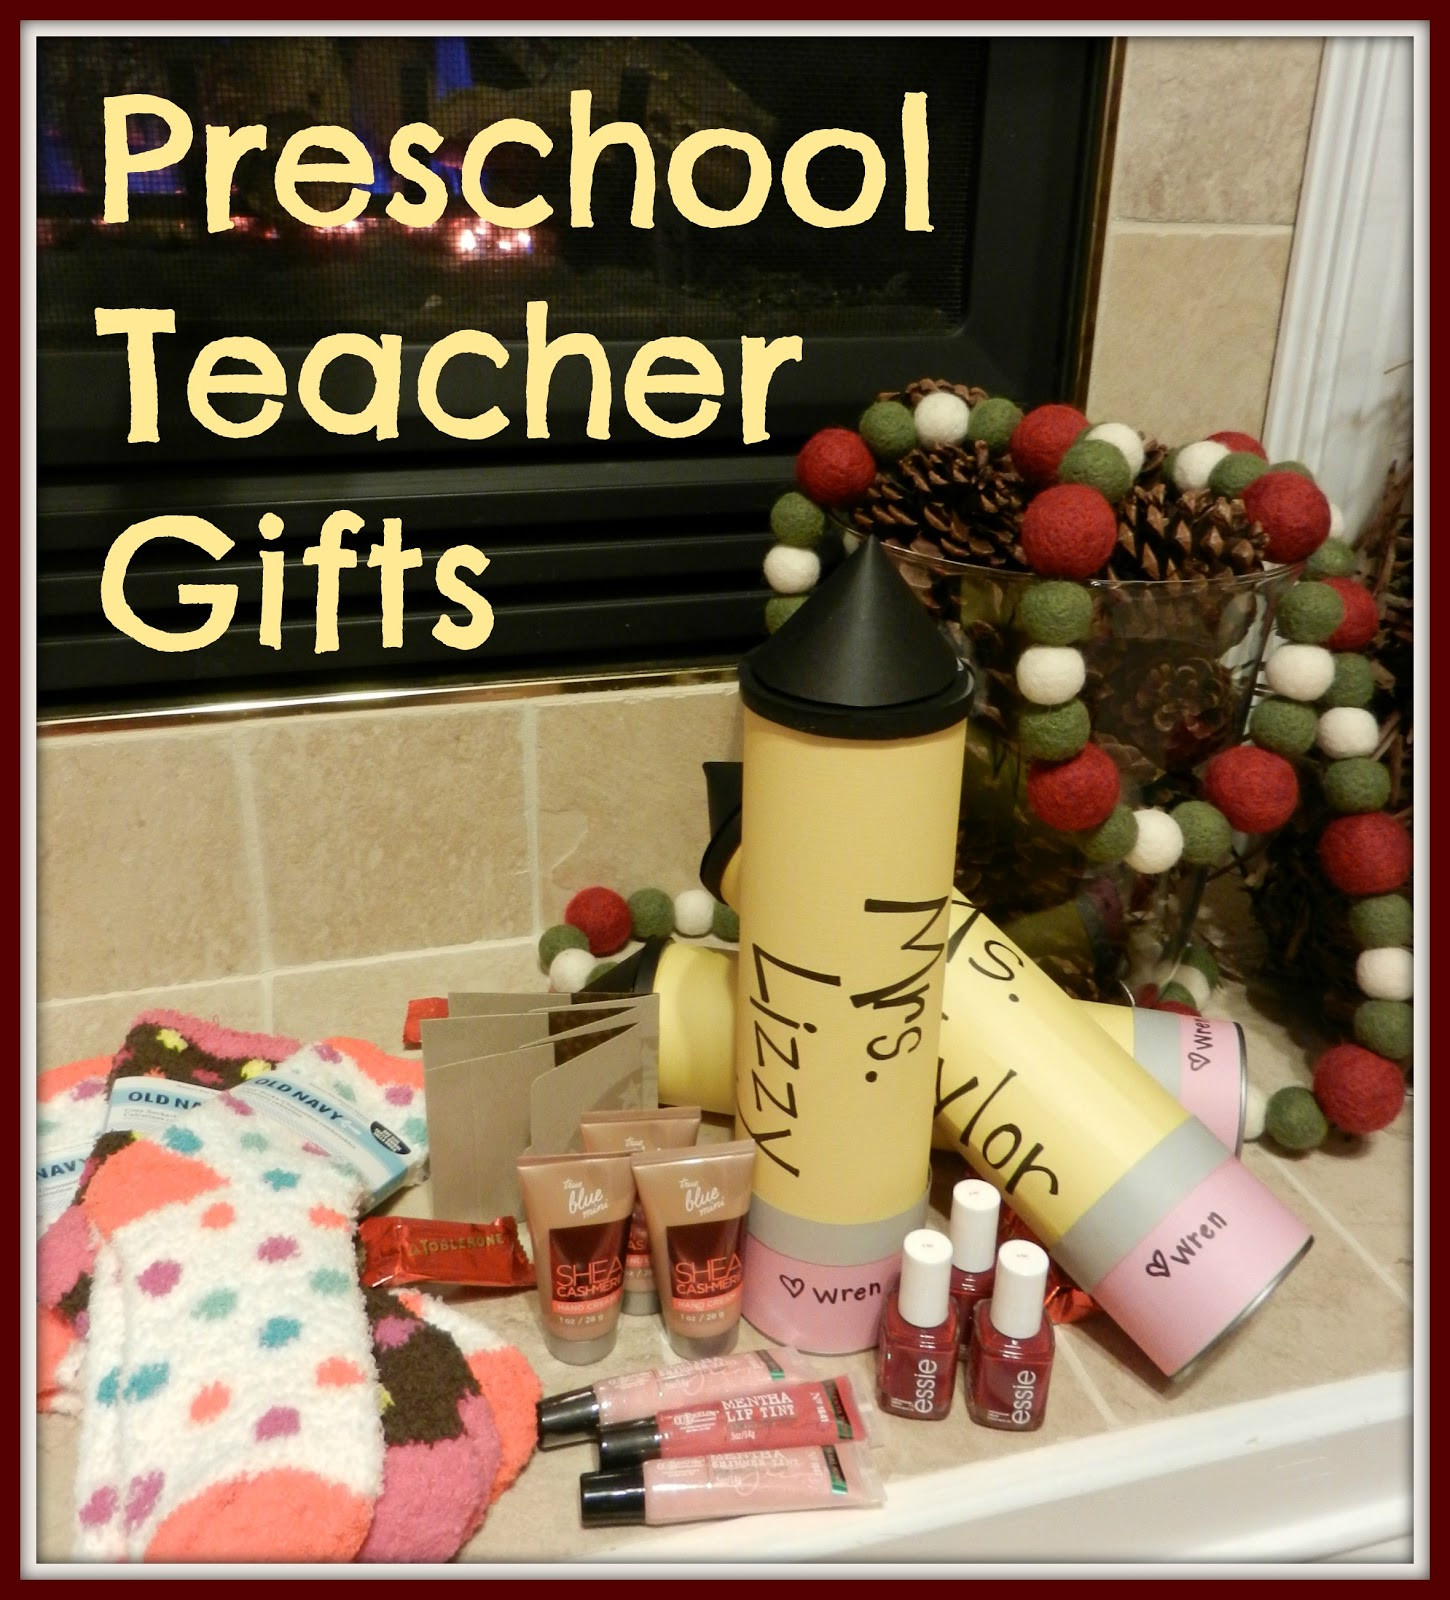 Preschool Teacher Christmas Gift Ideas
 chrismas t card for preschool teacher 2012